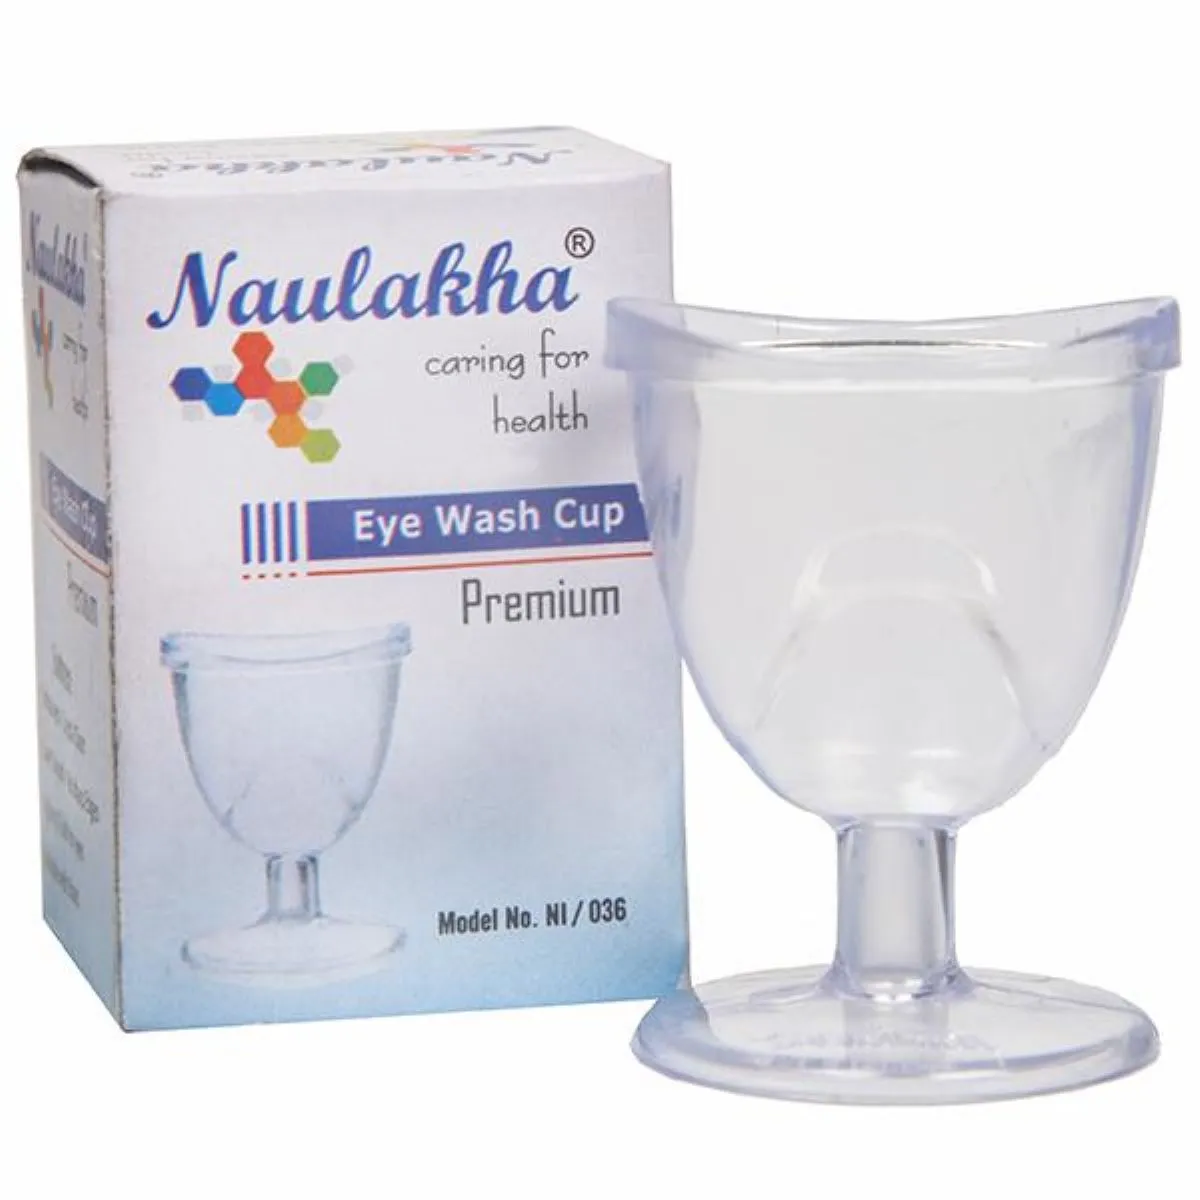 Naulakha Premium Eye Wash Cup, 1 Count